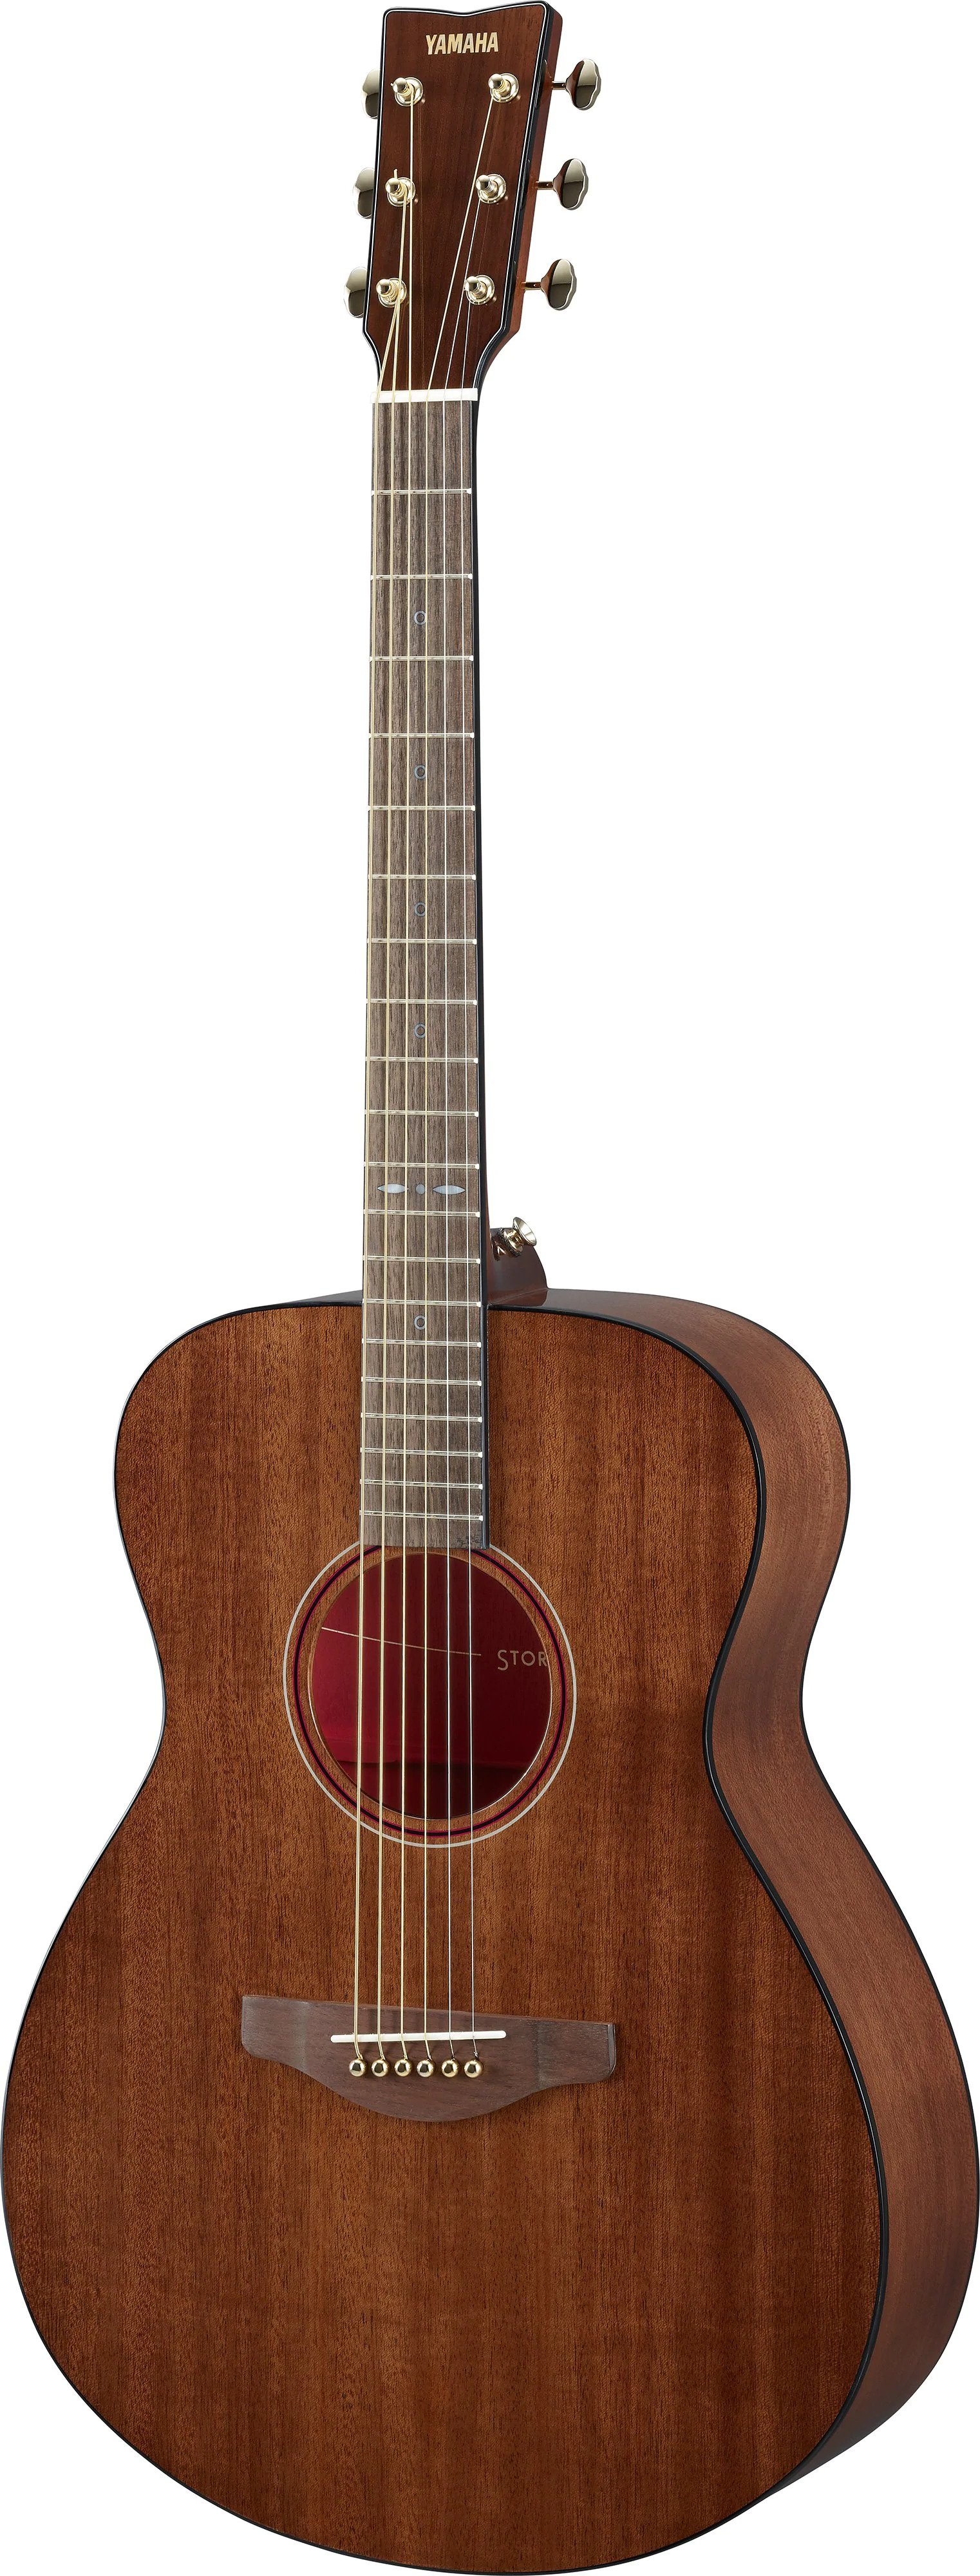 Yamaha Storia III Western Guitar (Chocolate Brown)